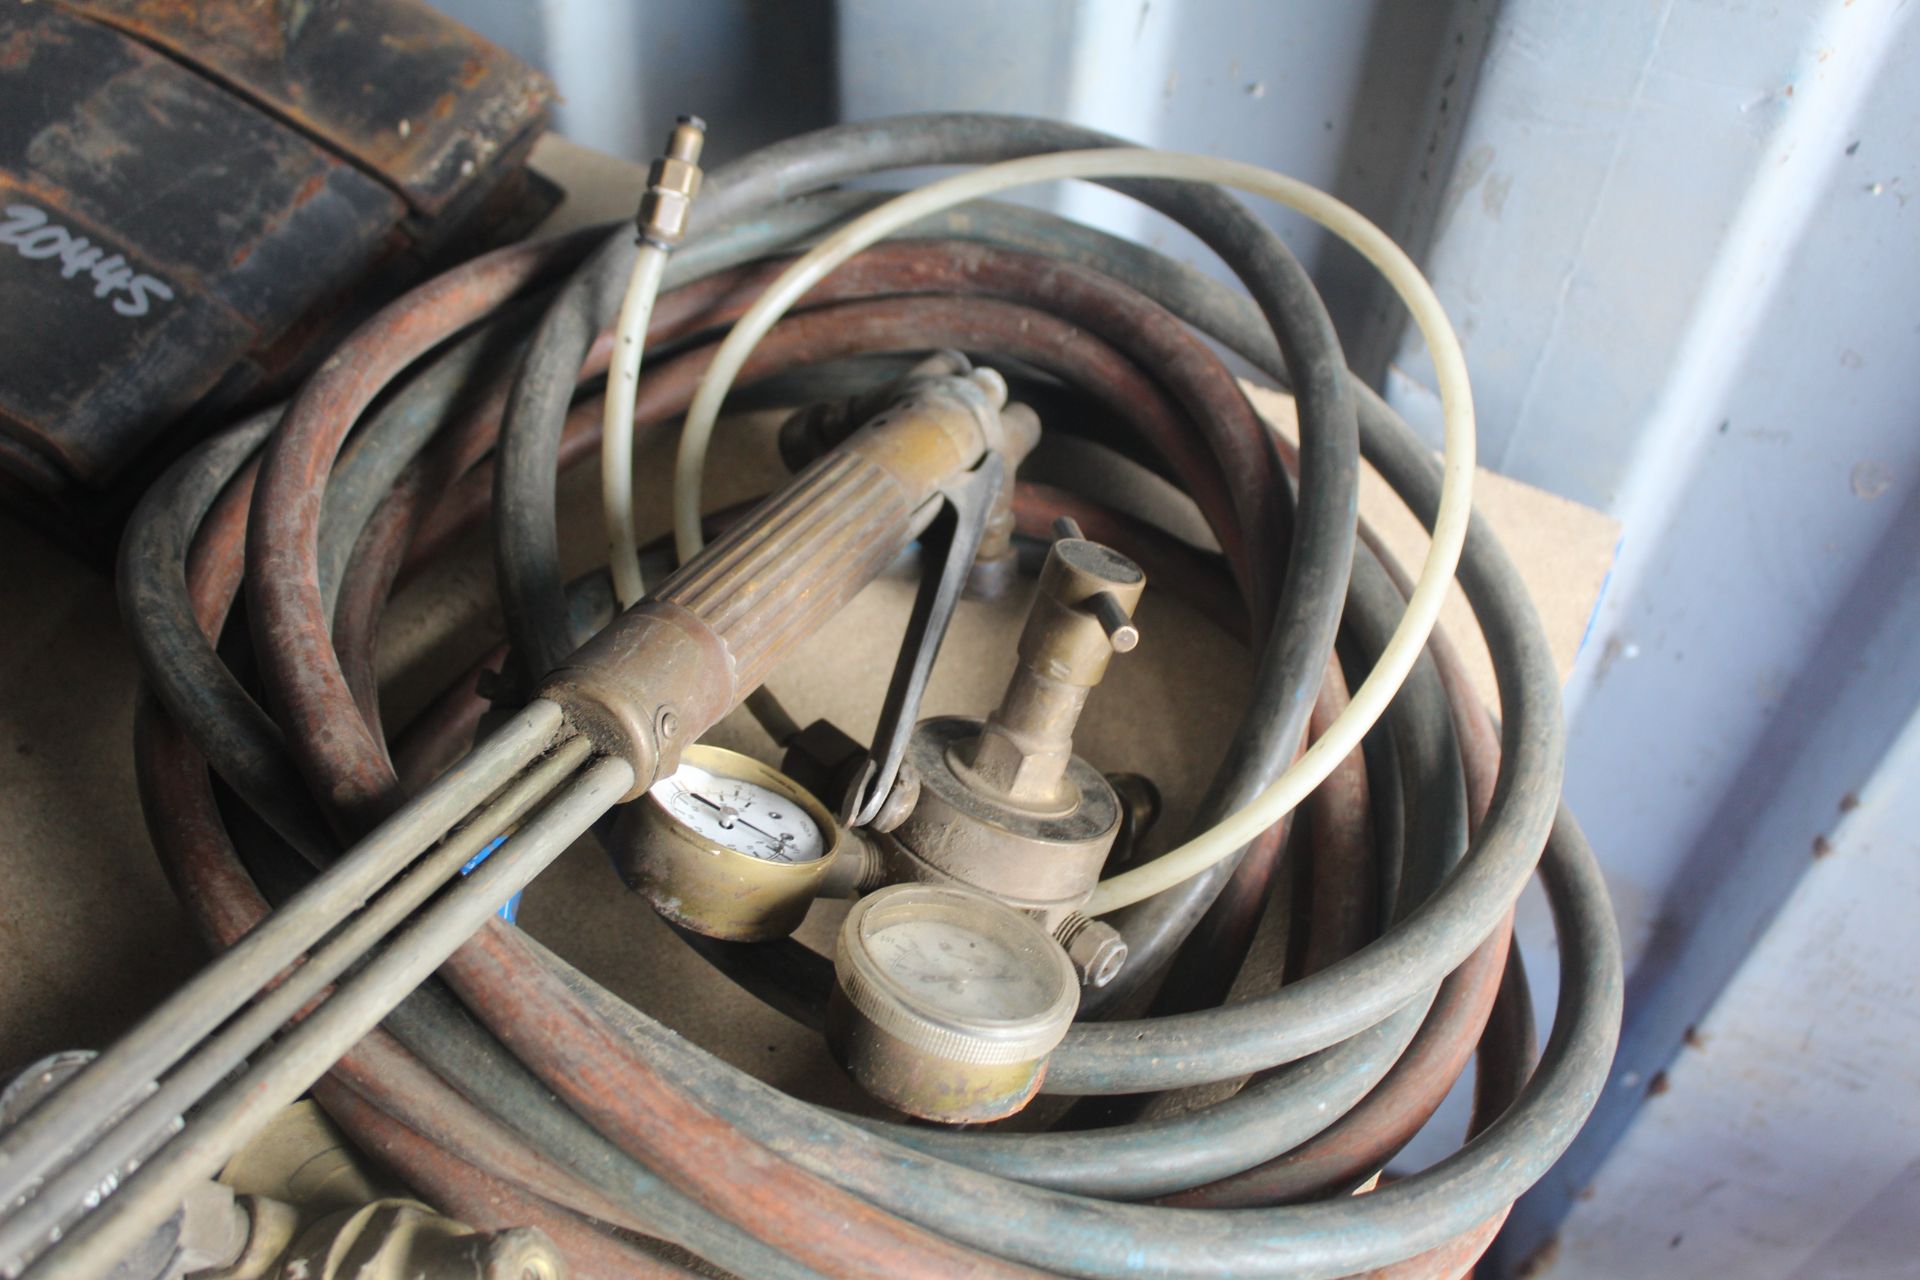 Gas bottle regulators, hoses and torch. - Image 3 of 3